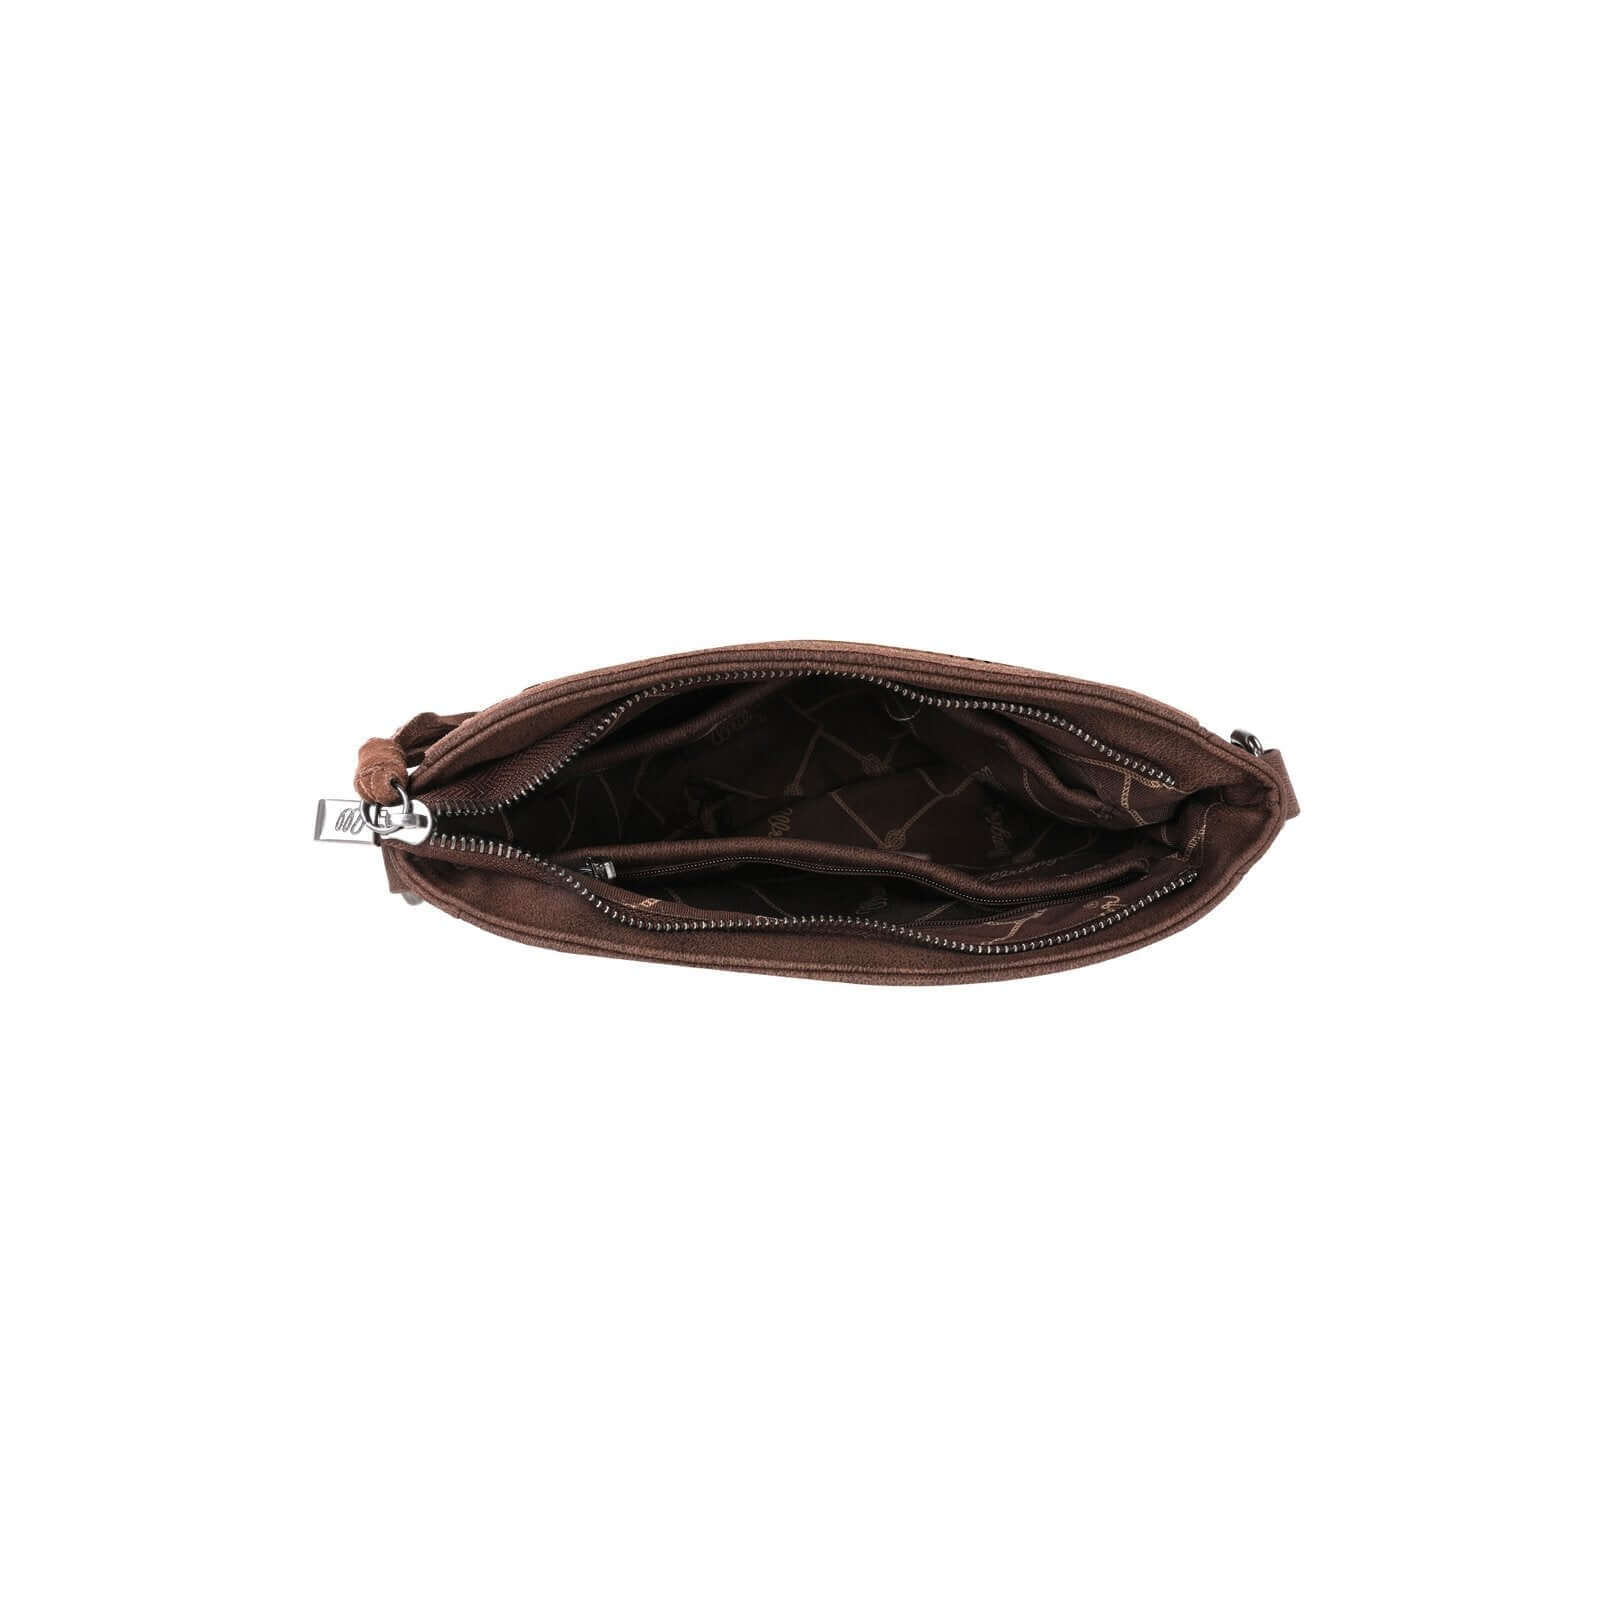 WG11-8360 CF-3 Wrangler leather fringe crossbody bag inside- Coffee